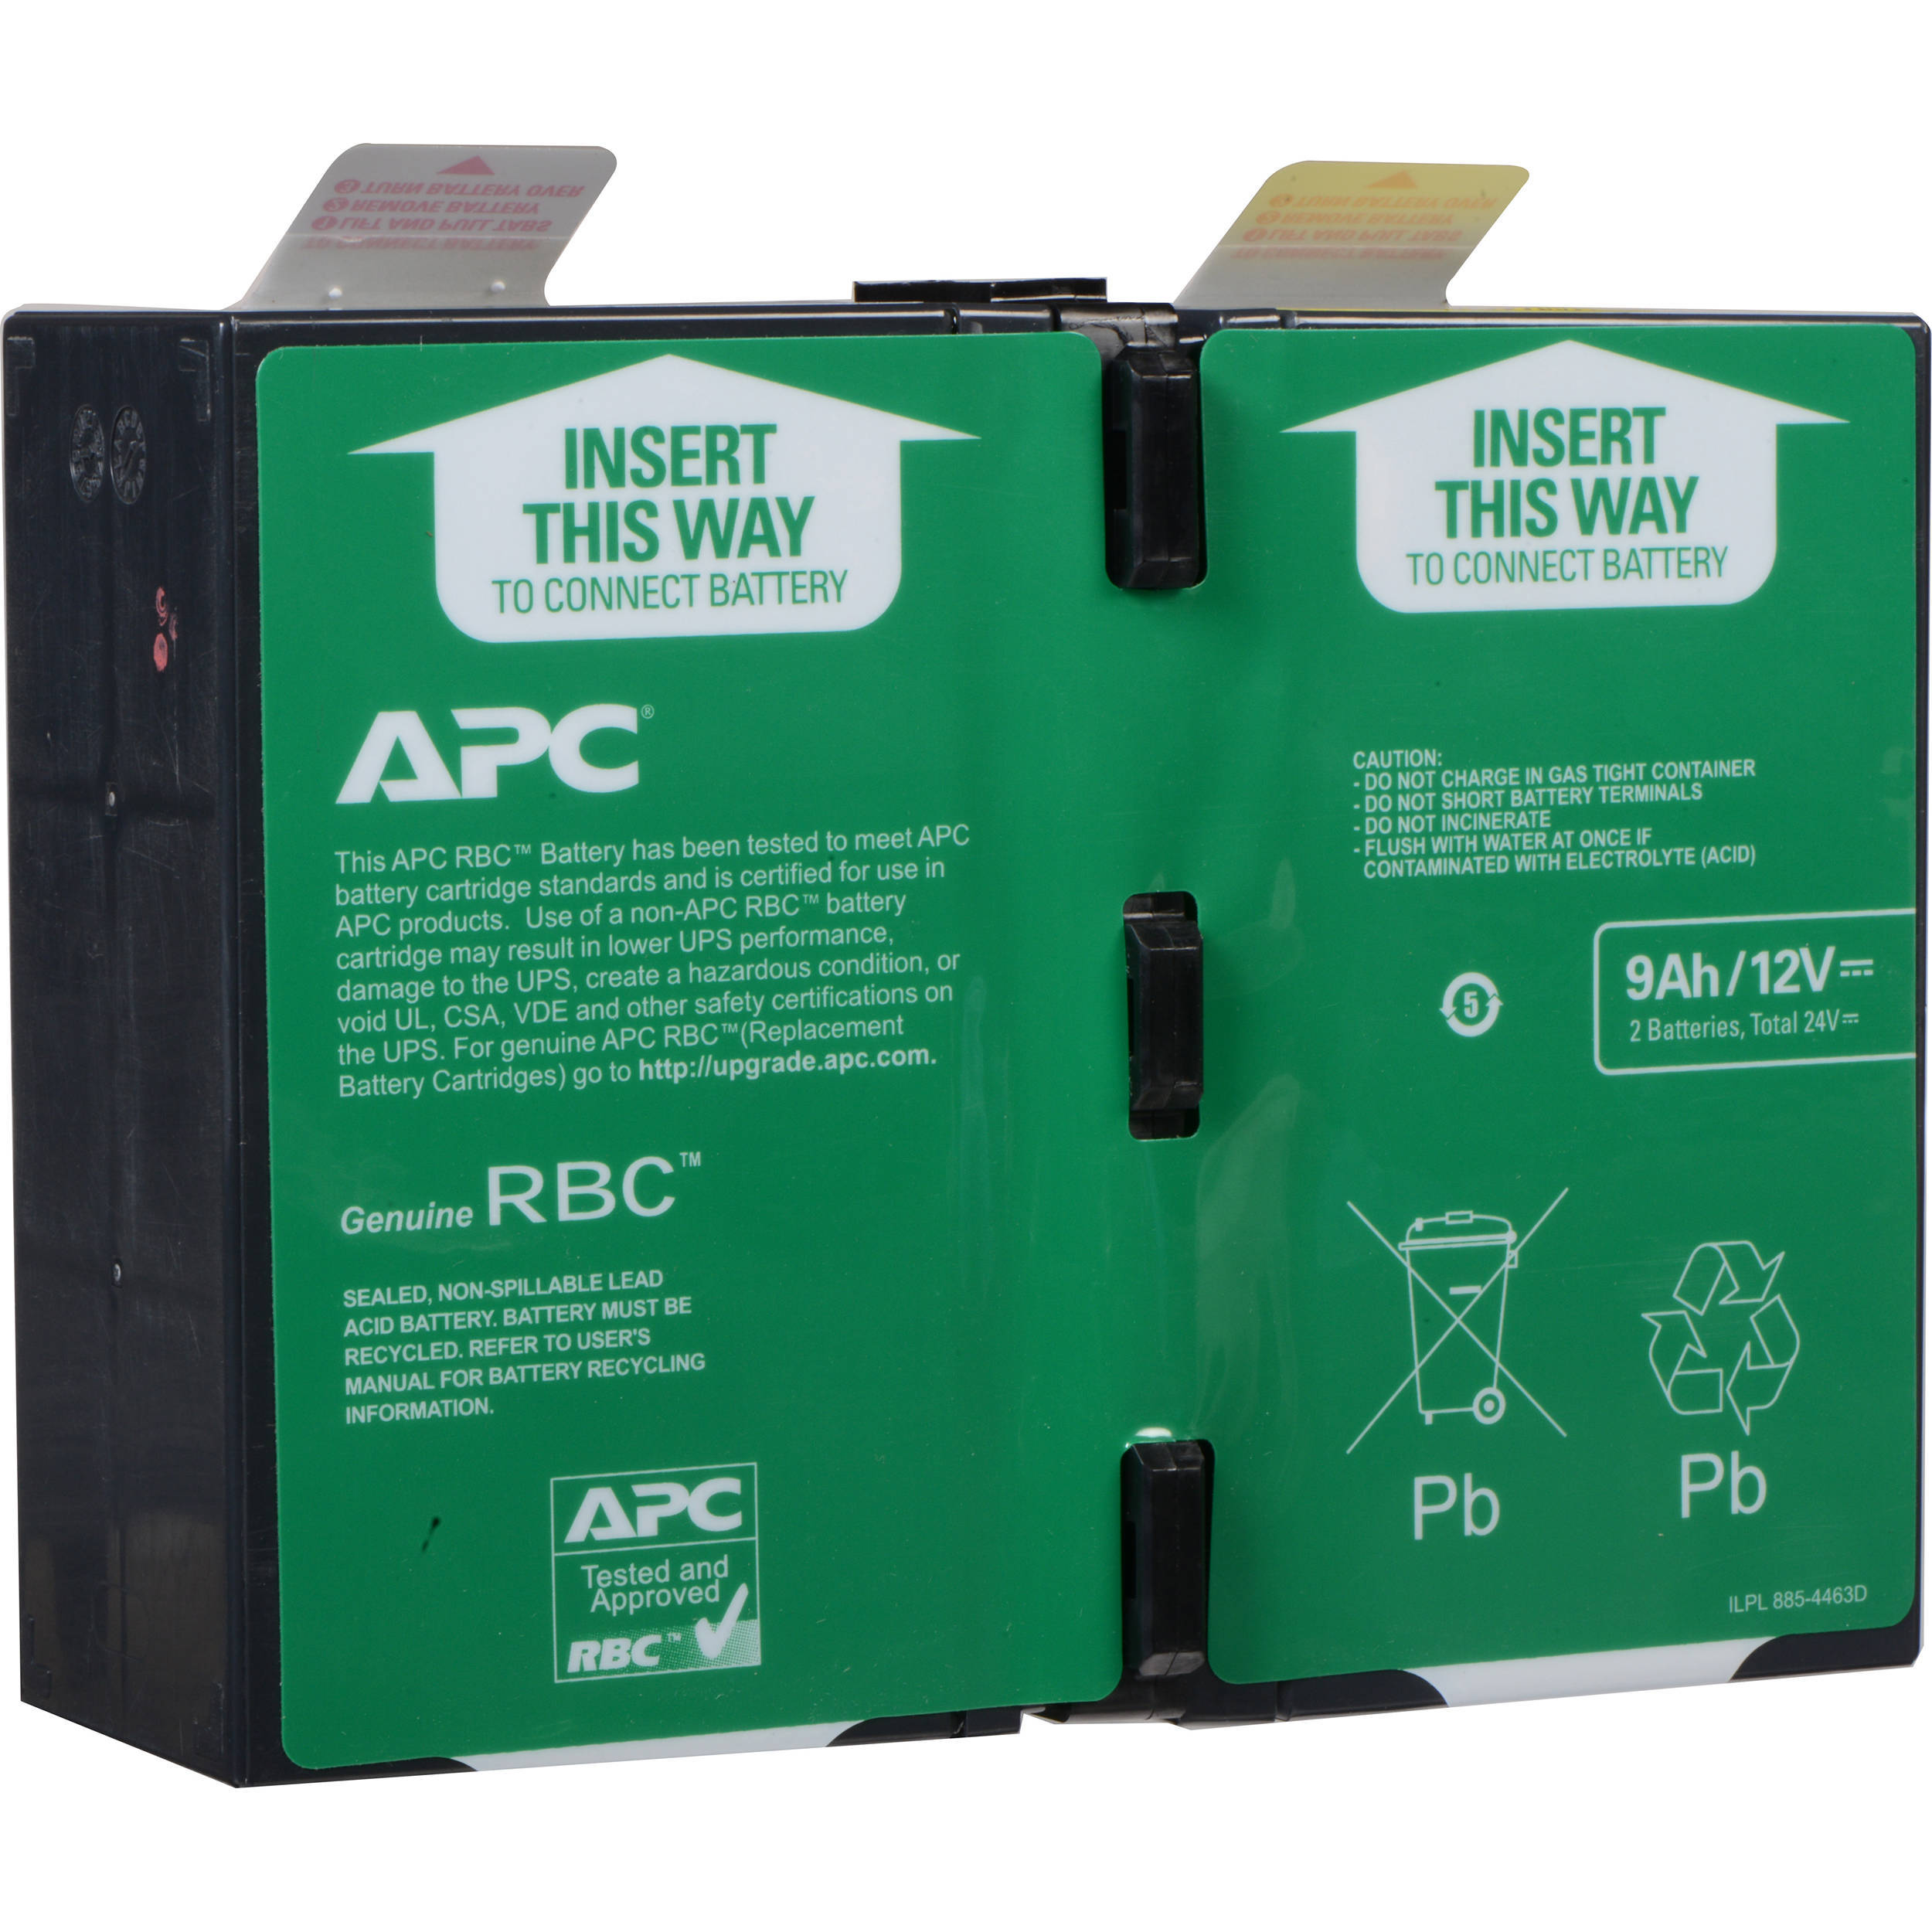 Apc batteries. Apcrbc124 батарея APC. Батарея аккумуляторная APC rbc124. Аккумуляторная батарея APC by Schneider Electric apcrbc124 9 а·ч. APC Replacement Battery Cartridge #124.